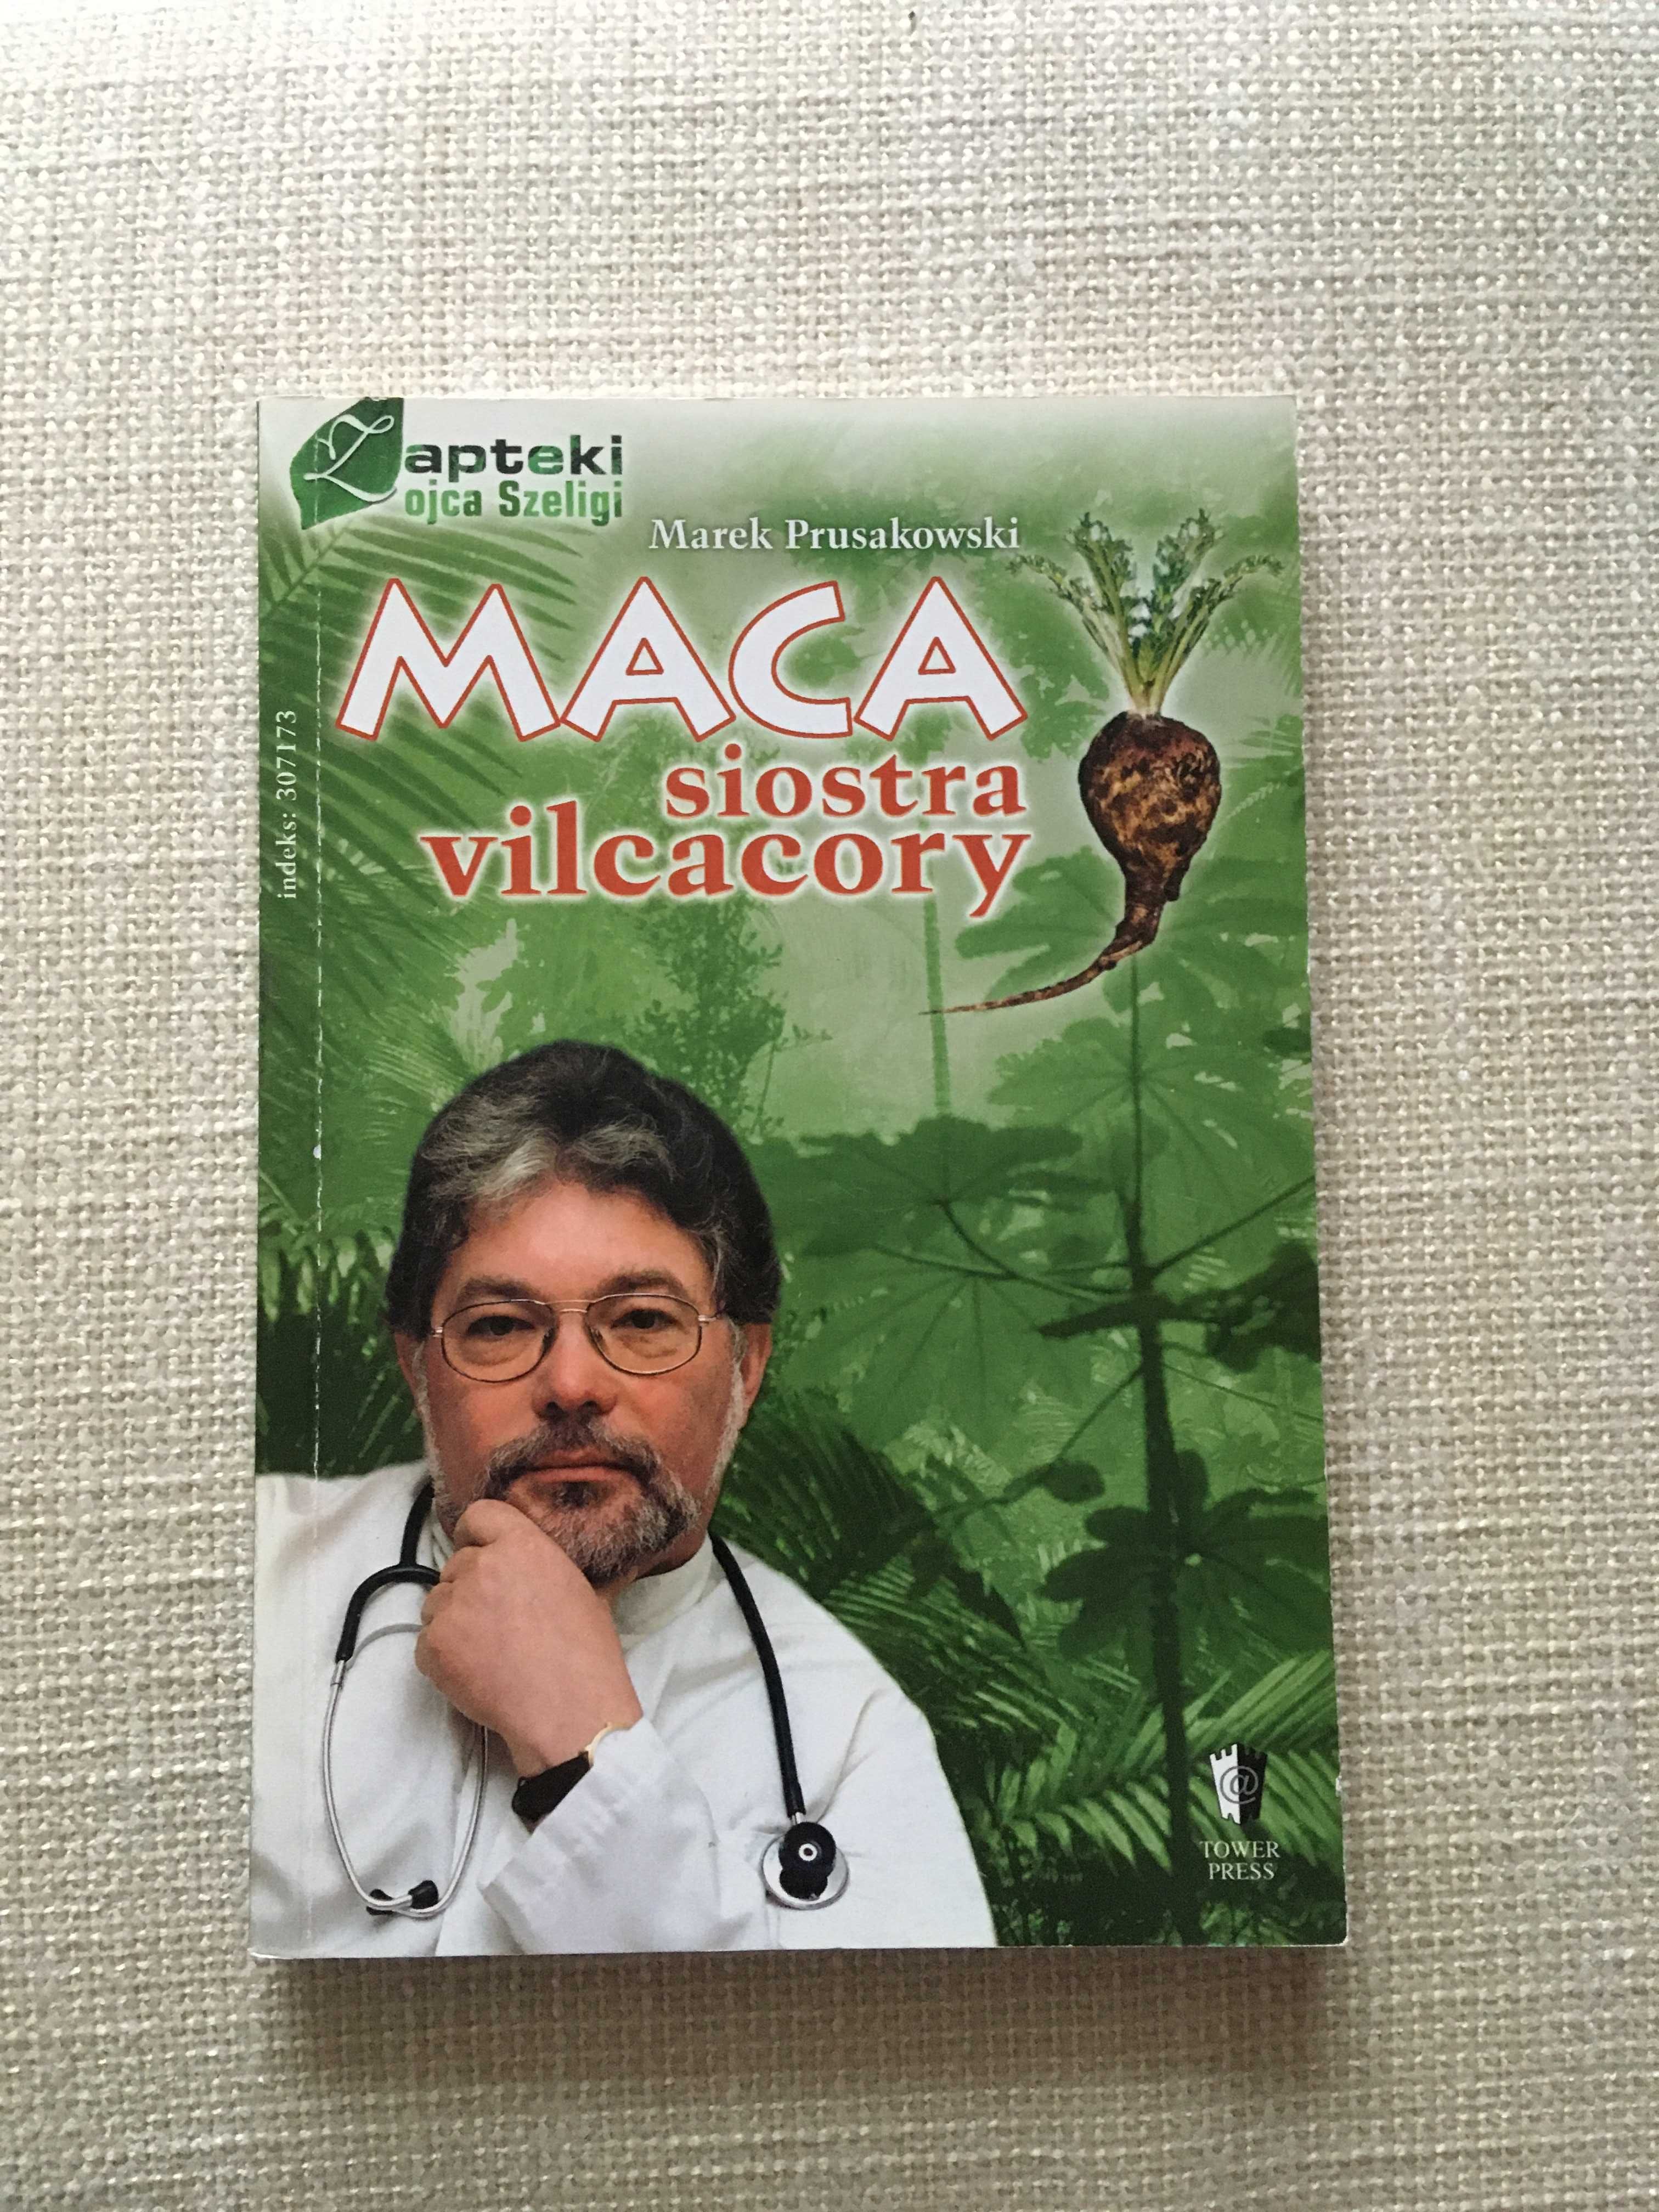 Książka Maca- siostra vilcacory, M. Prusakowski, nowa